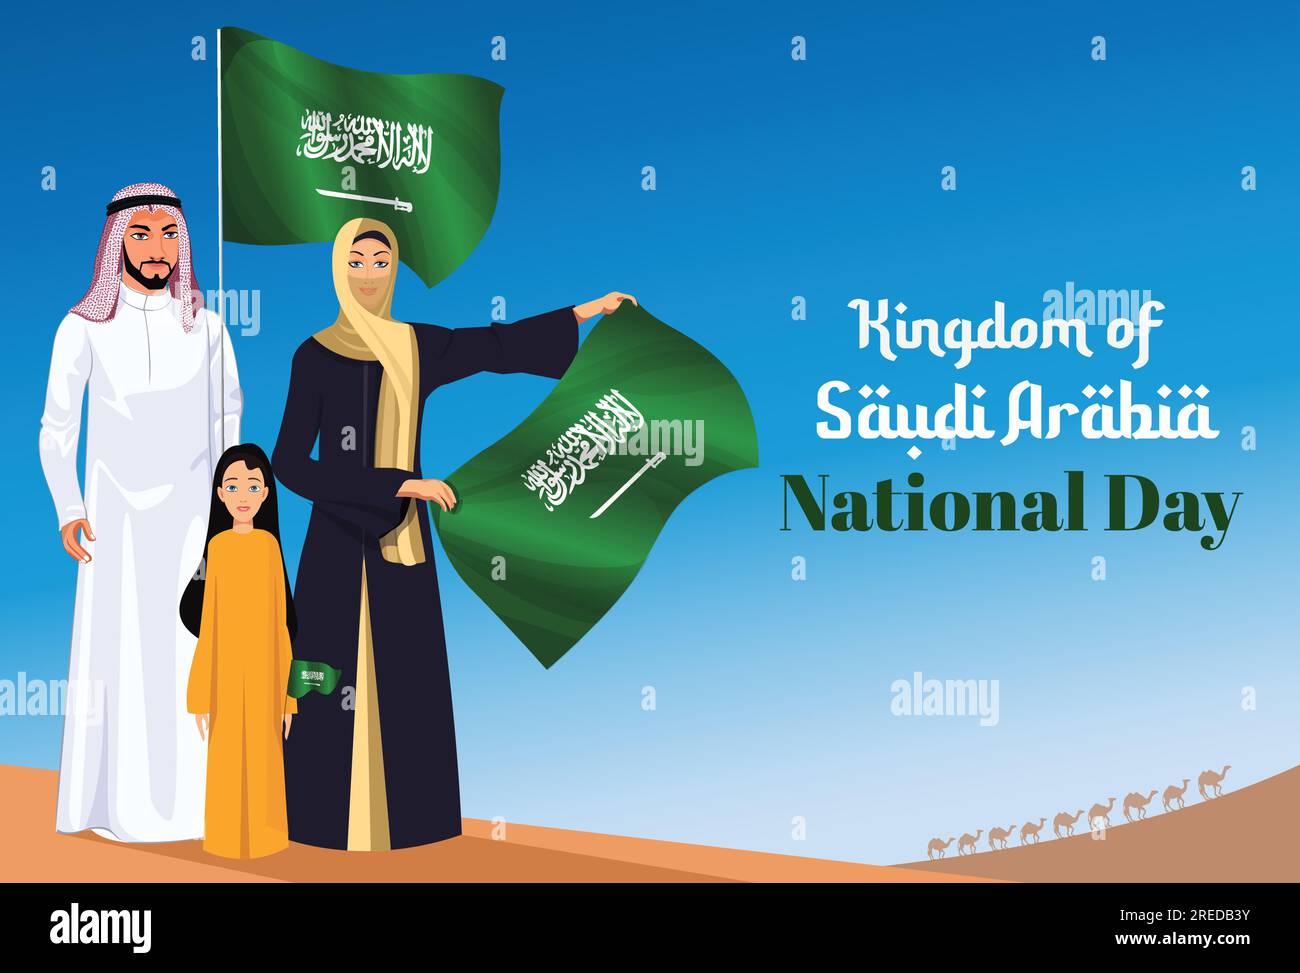 Saudi Arabia's National Day, Arab families celebrate. Arab women holding the Kingdom of Saudi Arabia flag. KSA National Flag Day Stock Vector